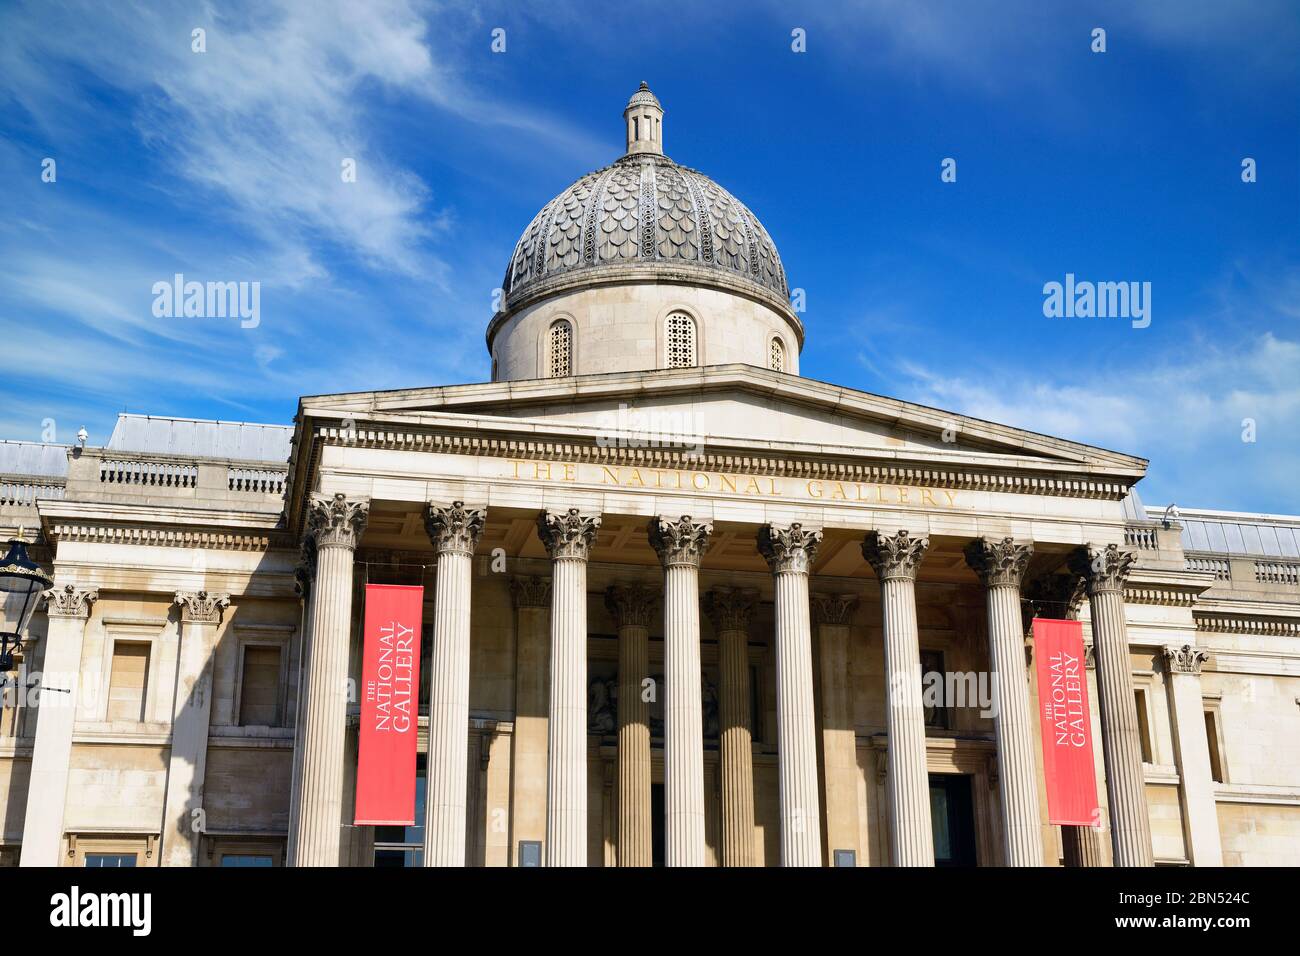 La National Gallery, Trafalgar Square, London, United Kingdom Banque D'Images